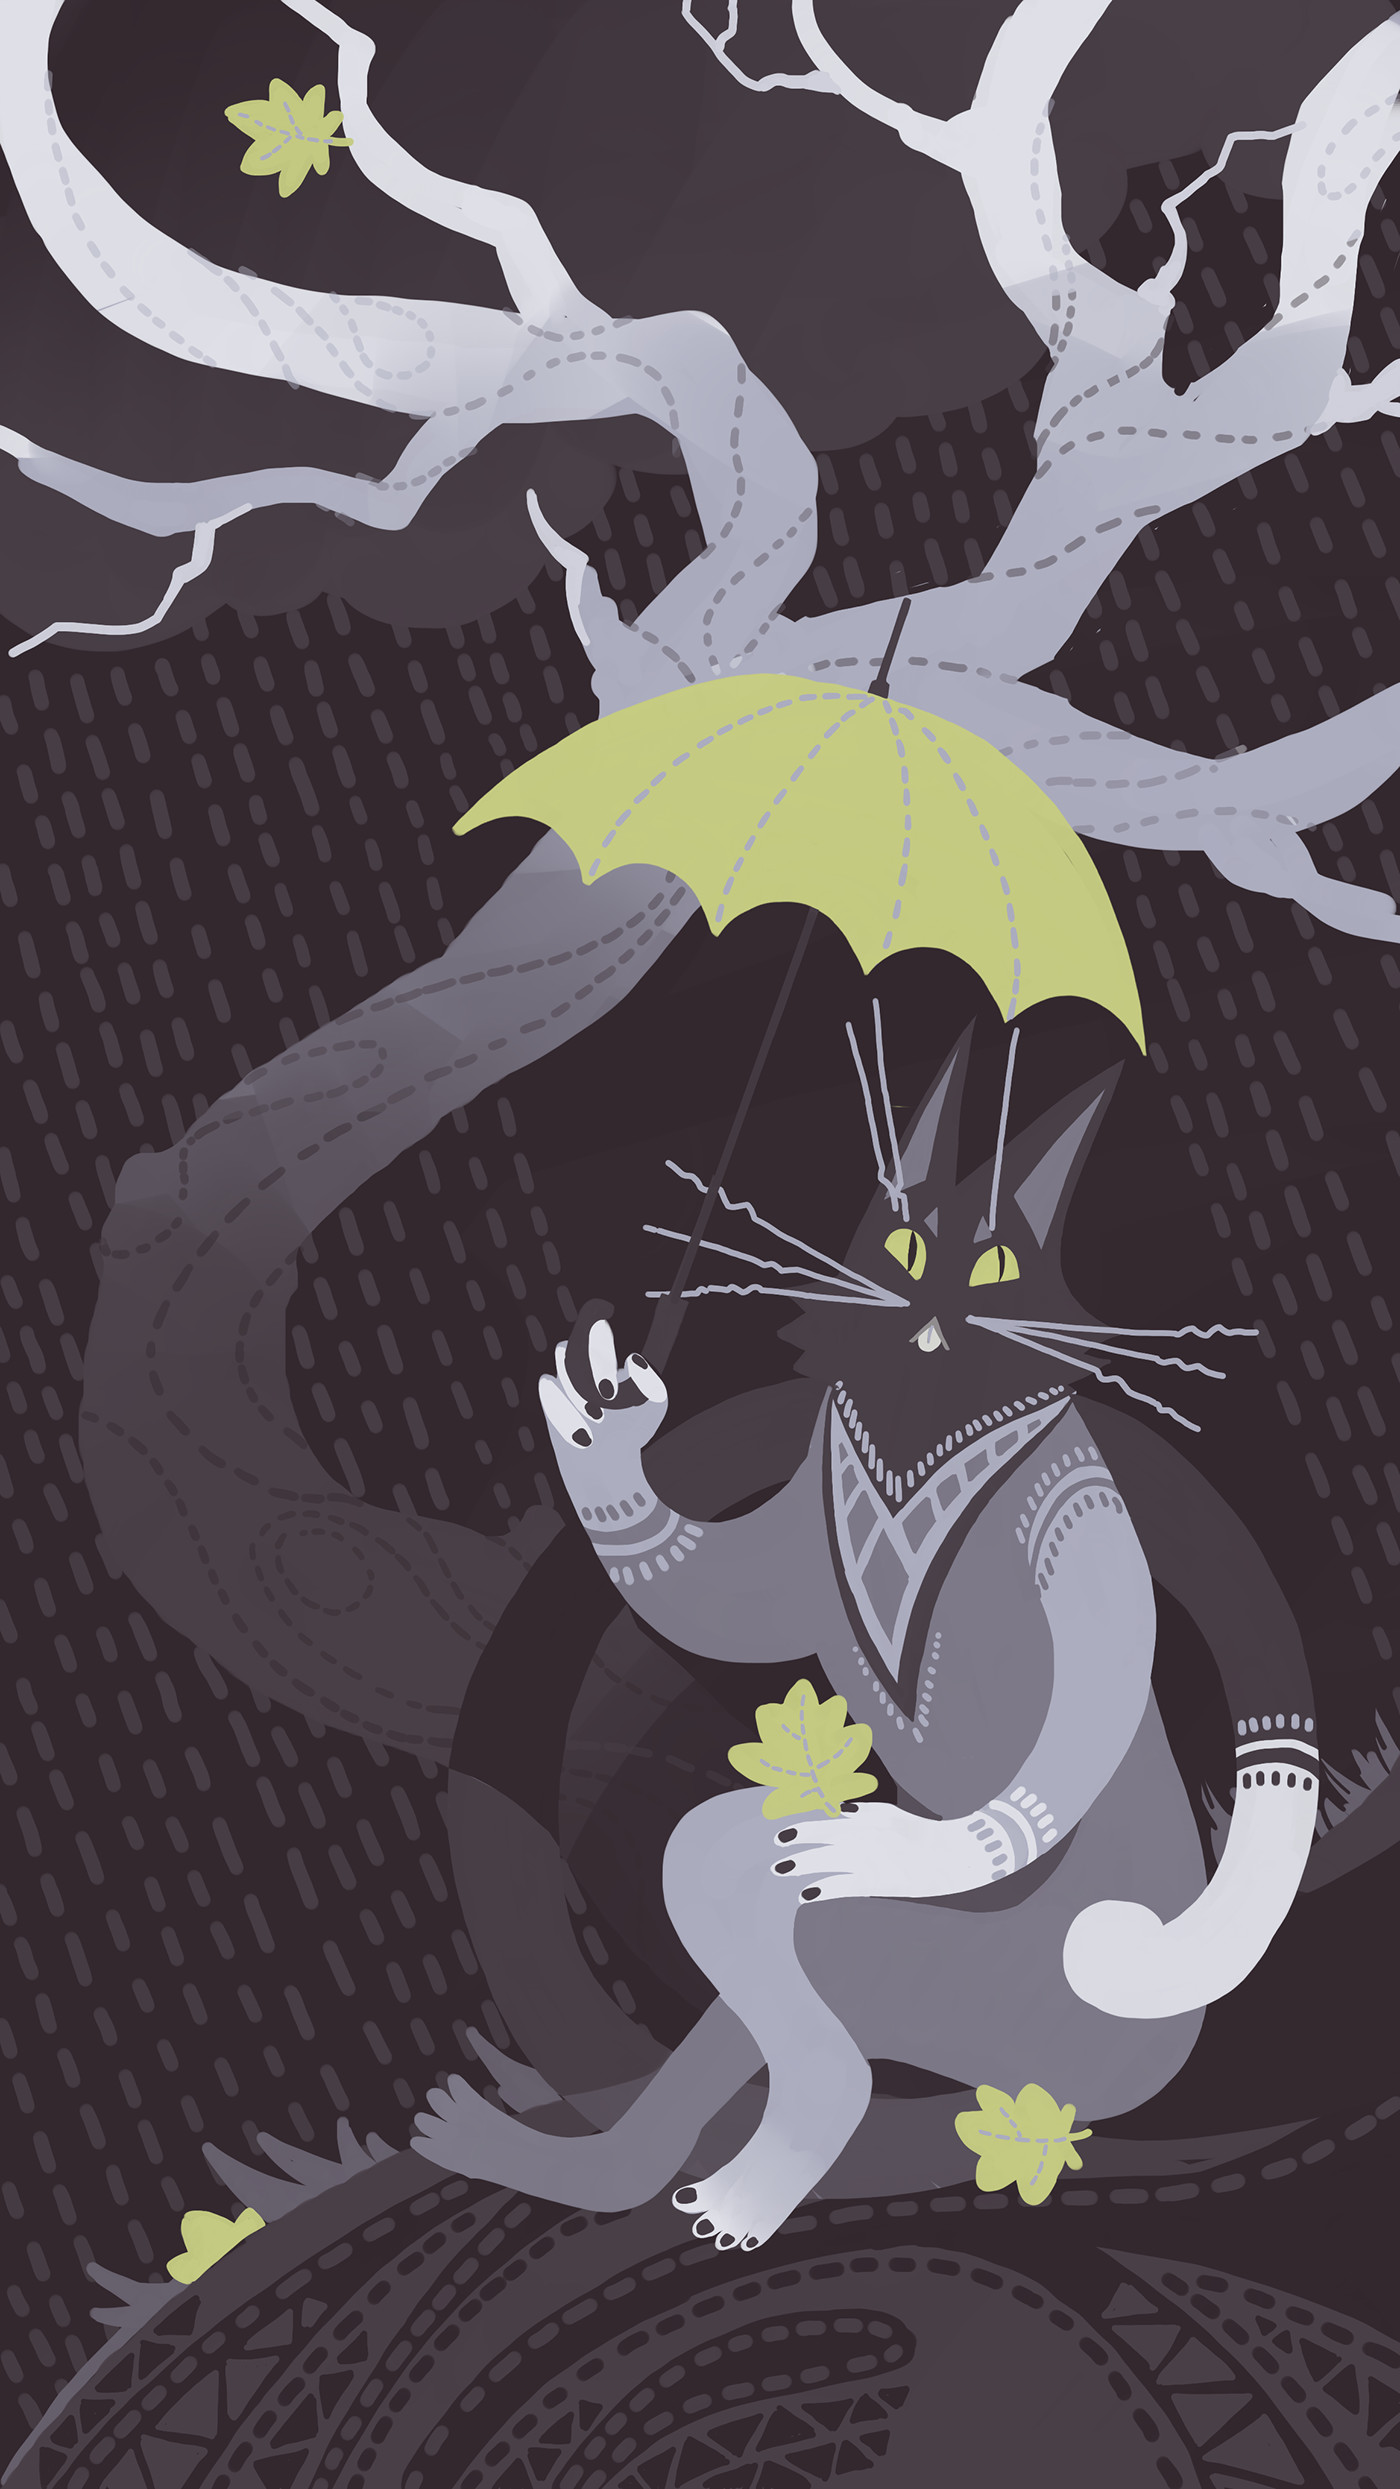 General 1400x2489 Anna Marukhnich illustration cats night umbrella trees Anthro